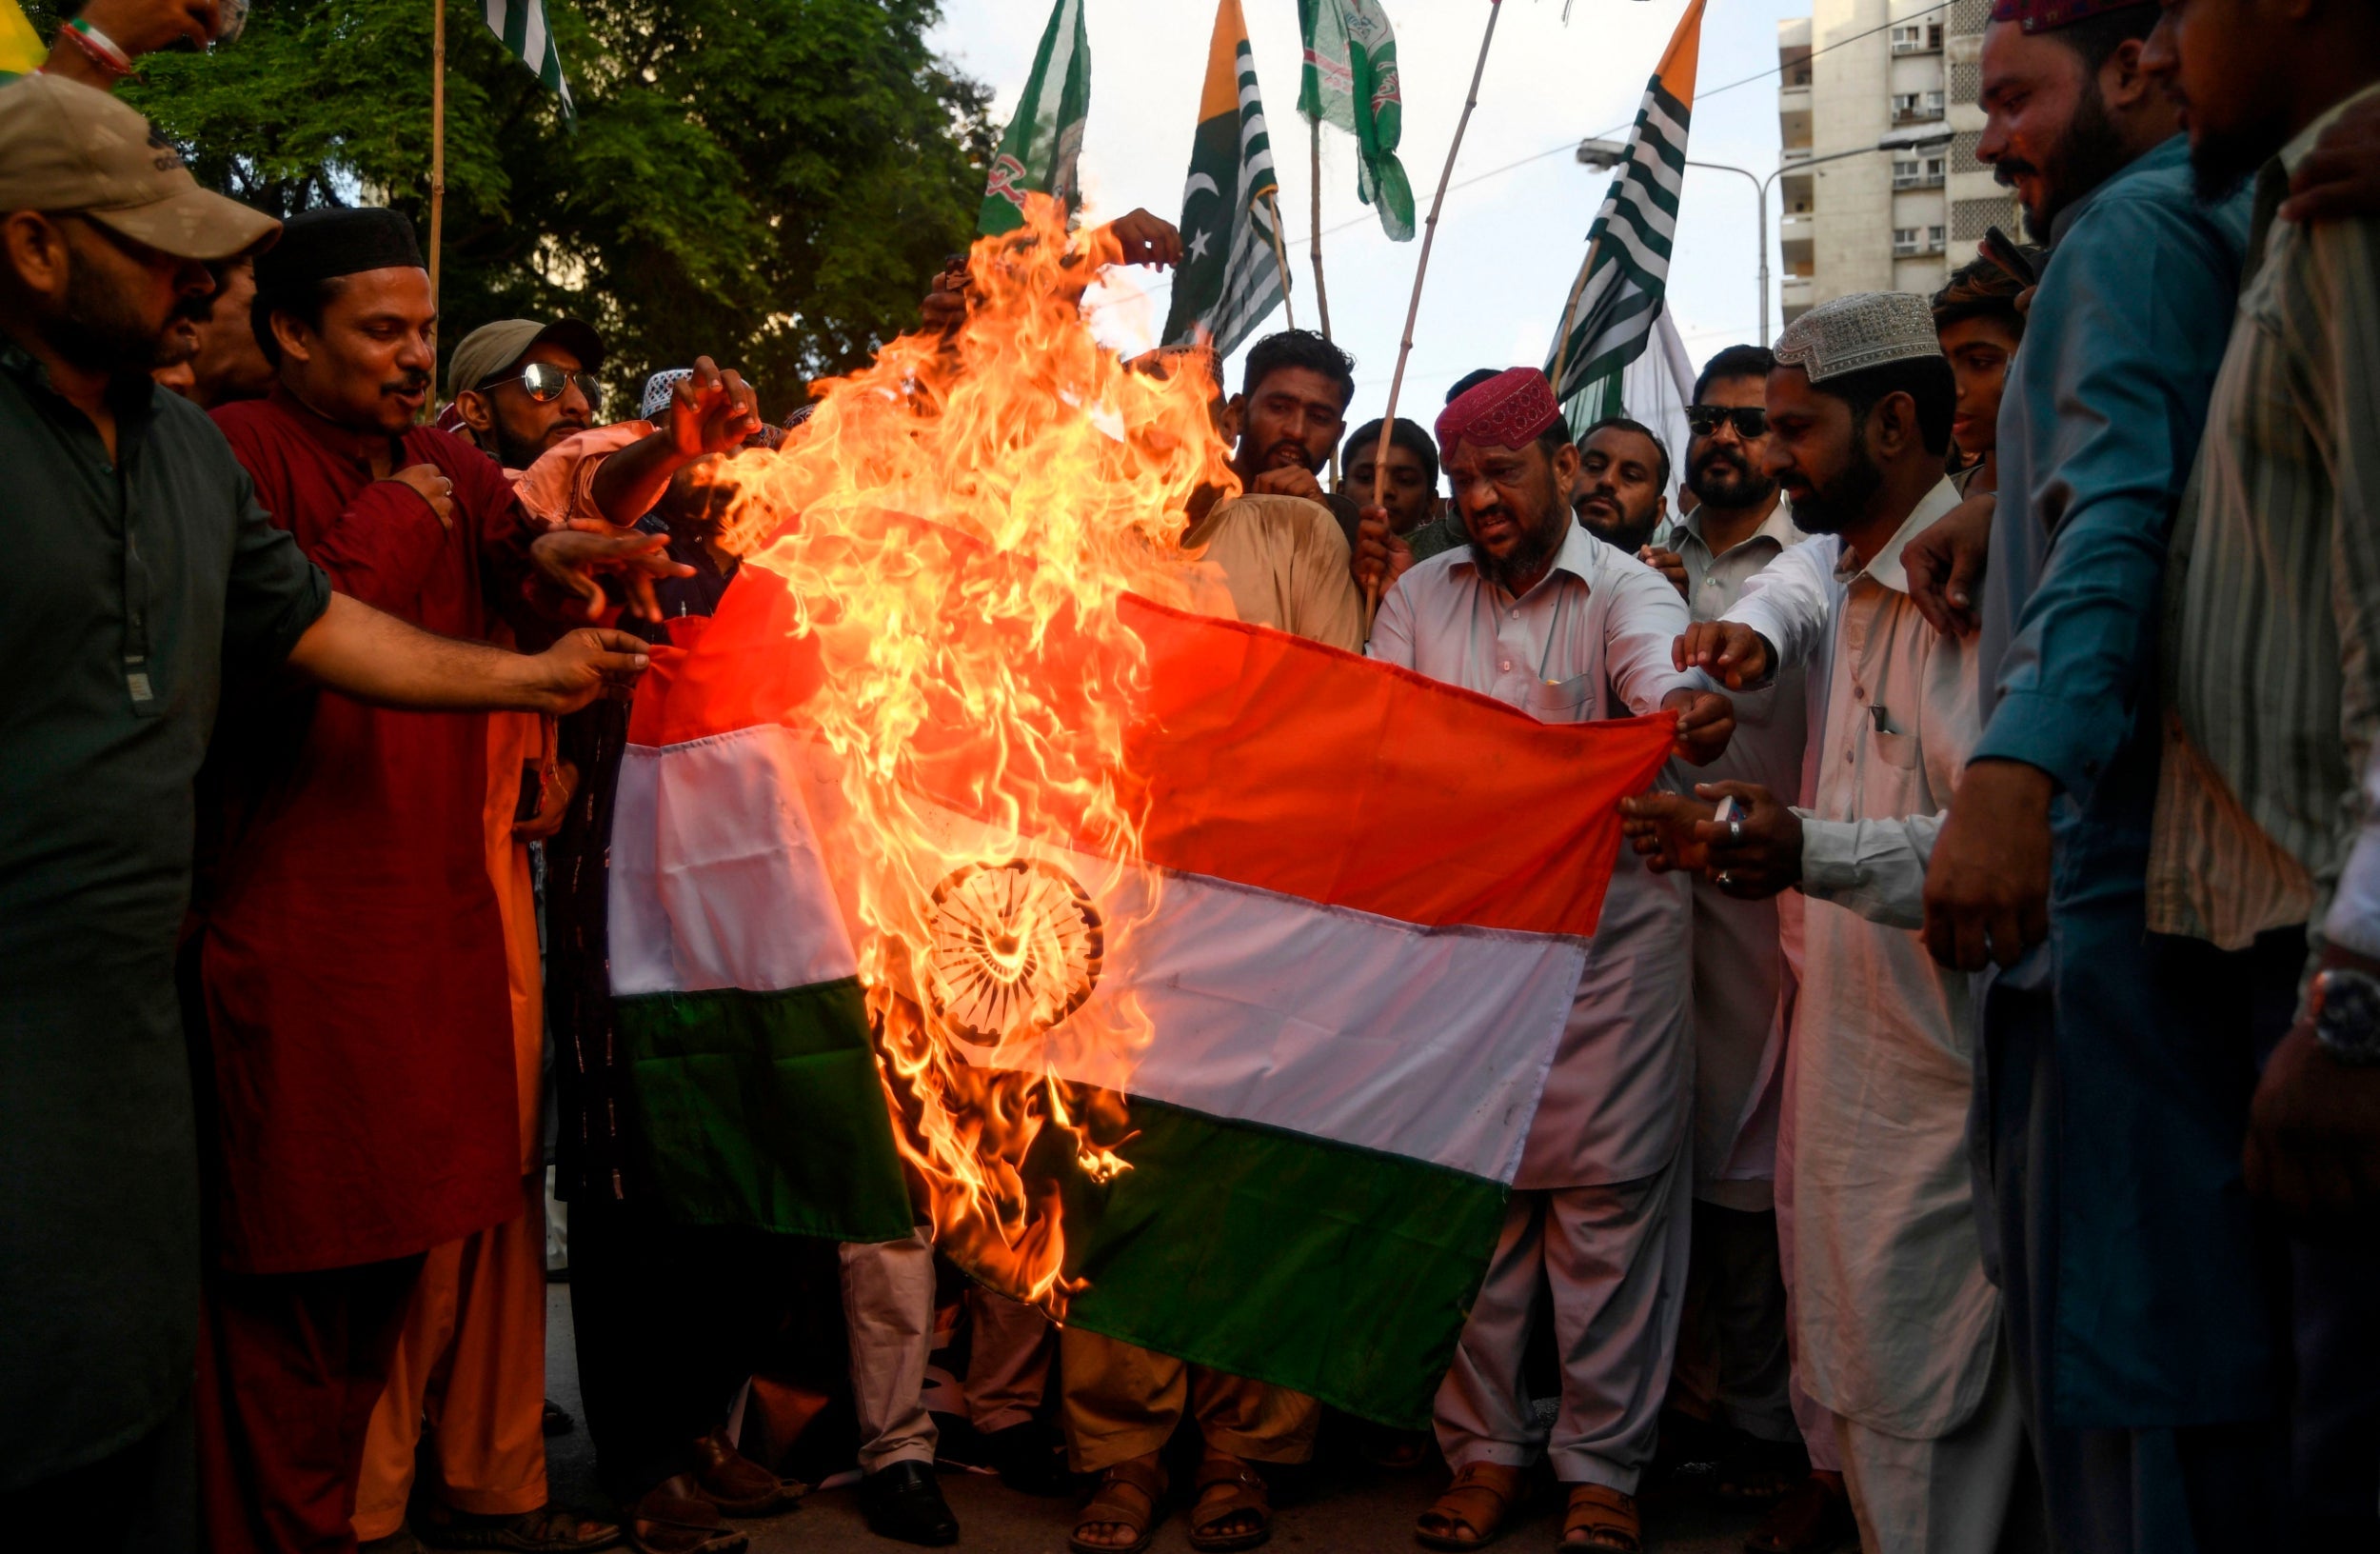 Demonstrators burn an Indian flag during a protest in Karachi